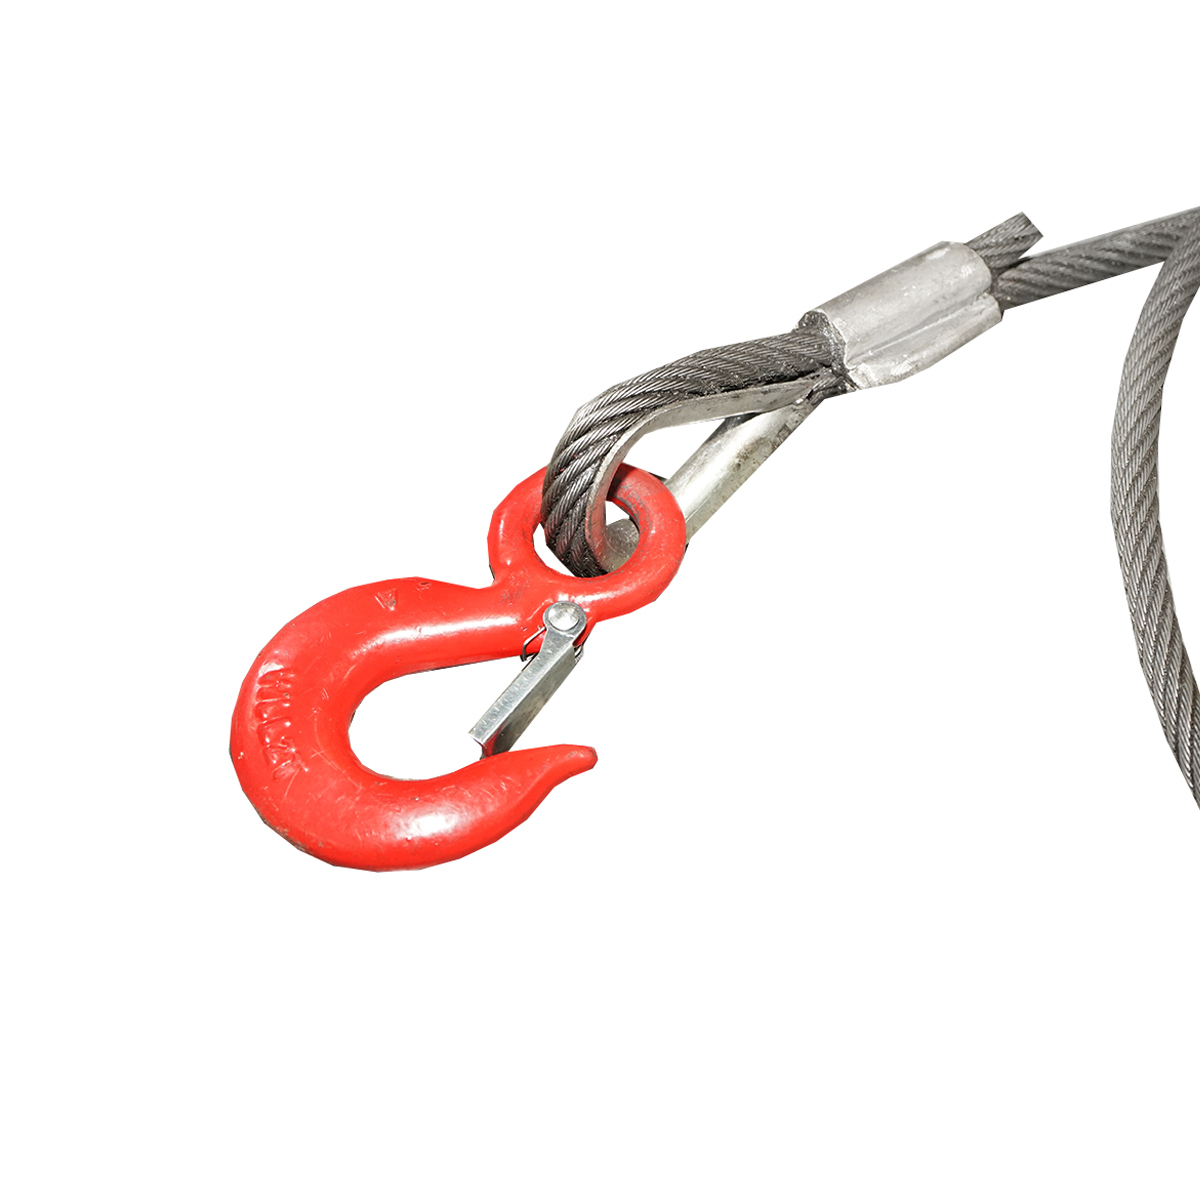 Cablu/sufa troliu din otel cu grosime de 12mm si lungime de 3m, carlig si inel pentru tractat sau ridicat